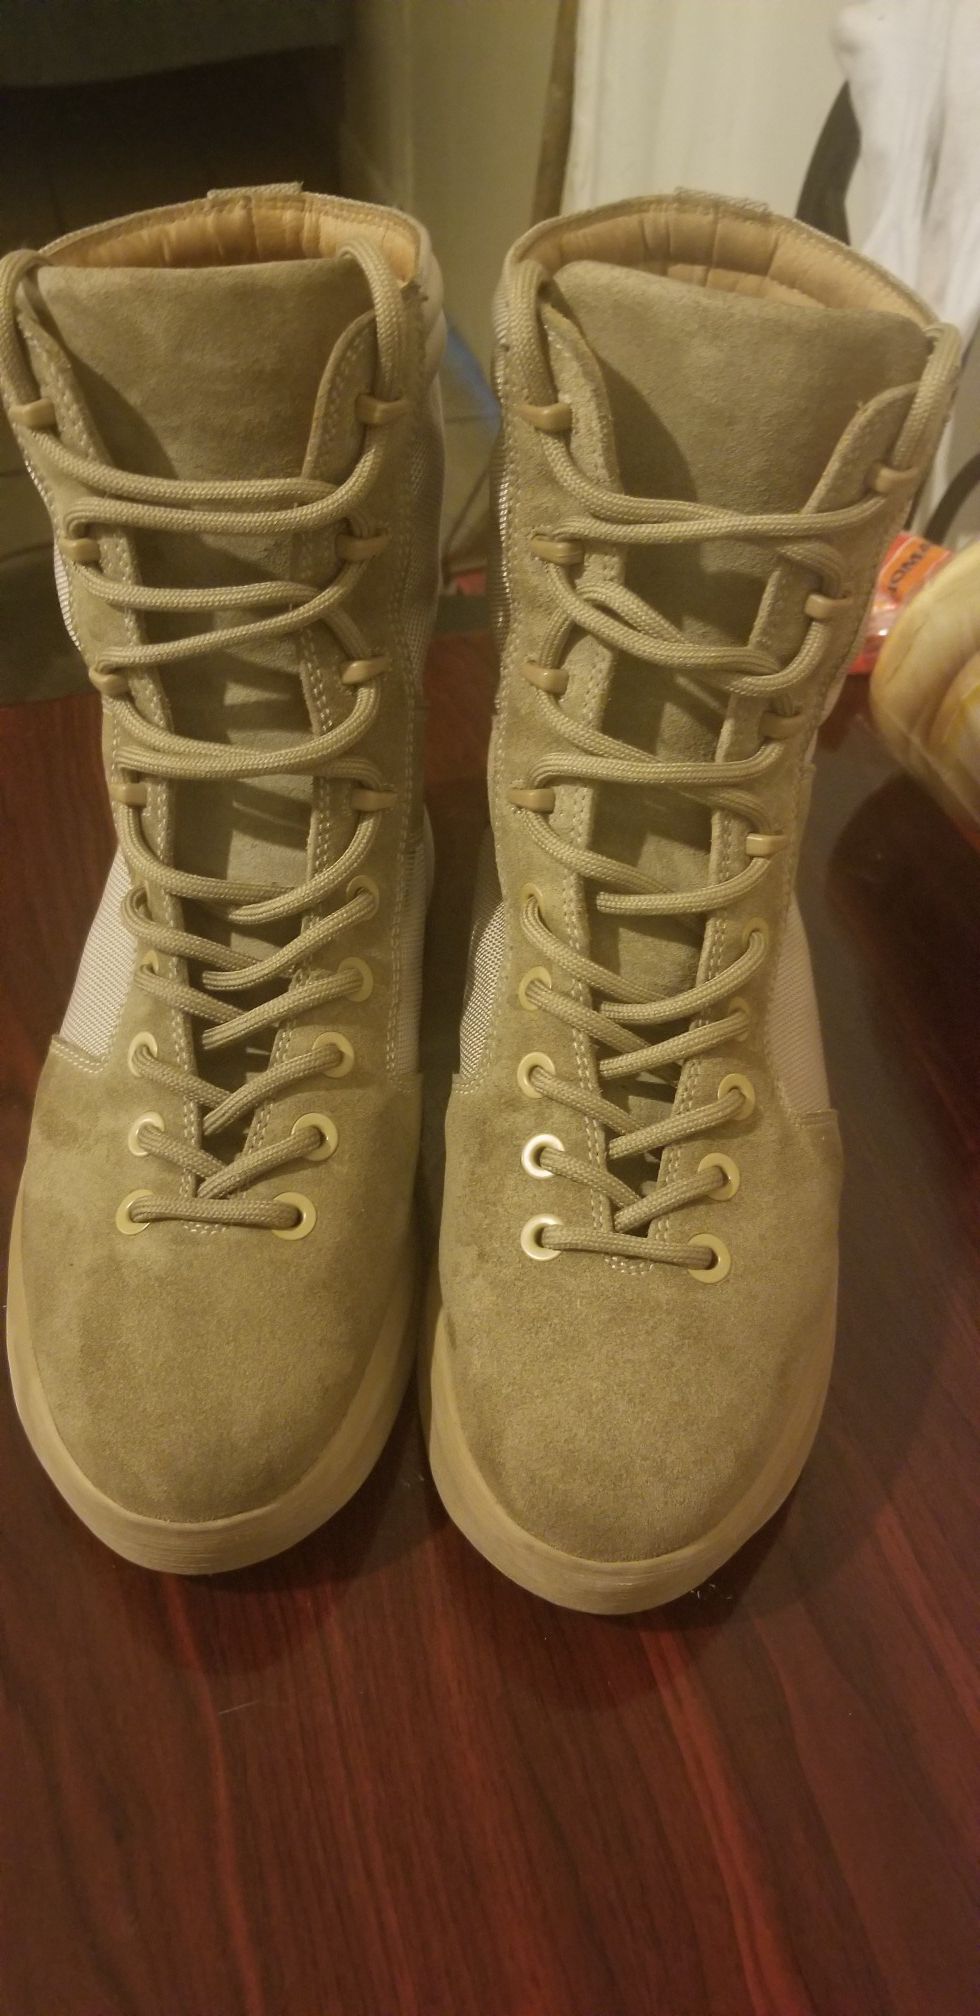 Yeezy season 3 military boots